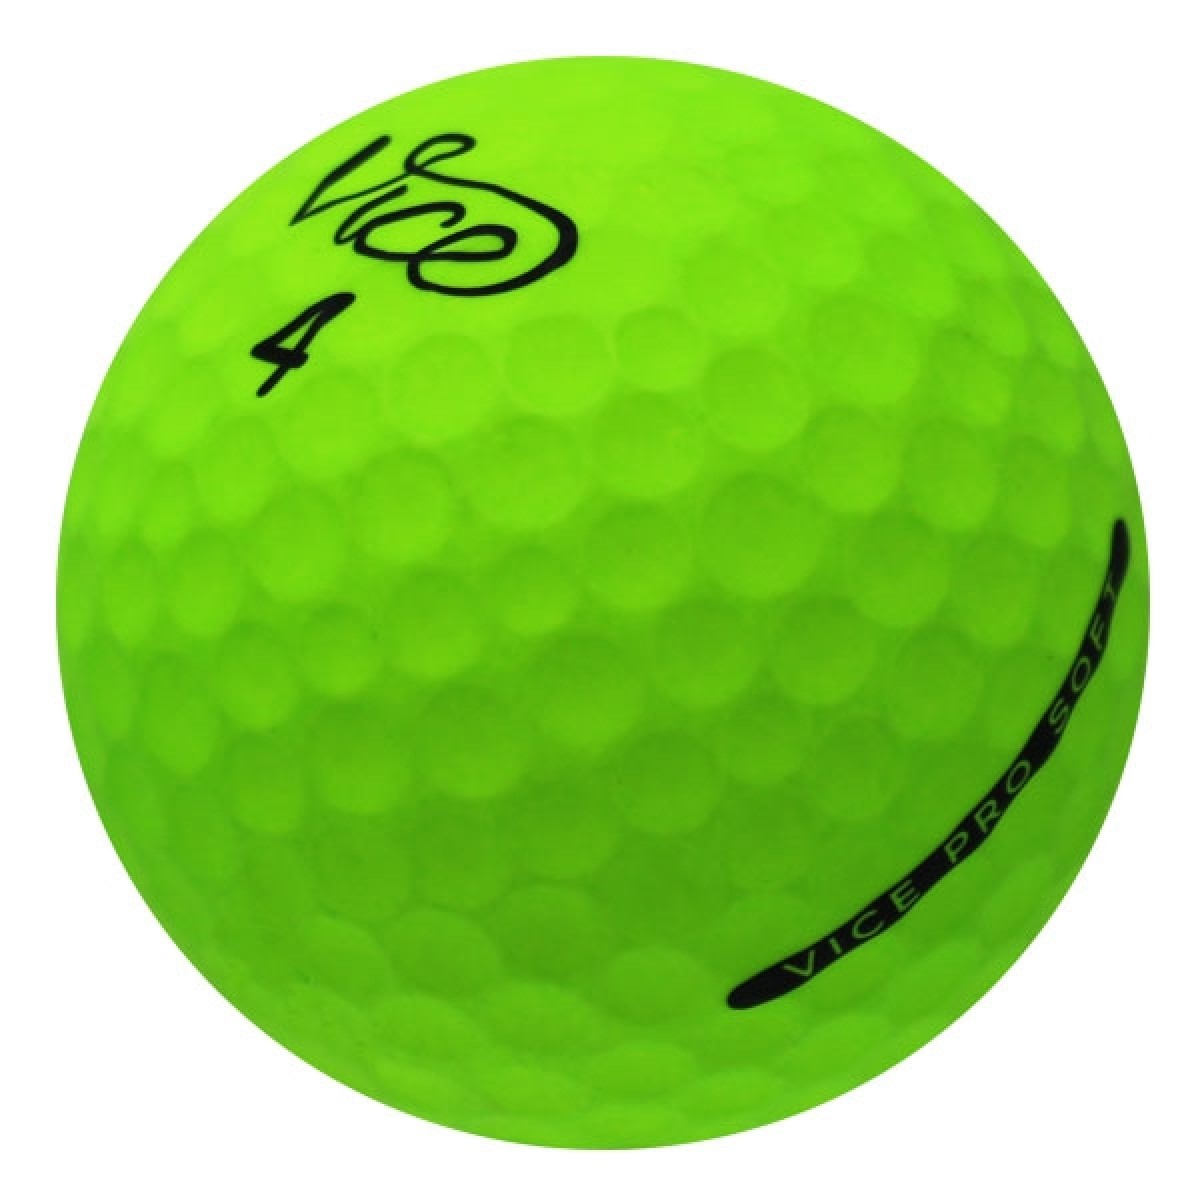 Vice Pro Soft Lime Green Golf Balls | Lostgolfballs.com